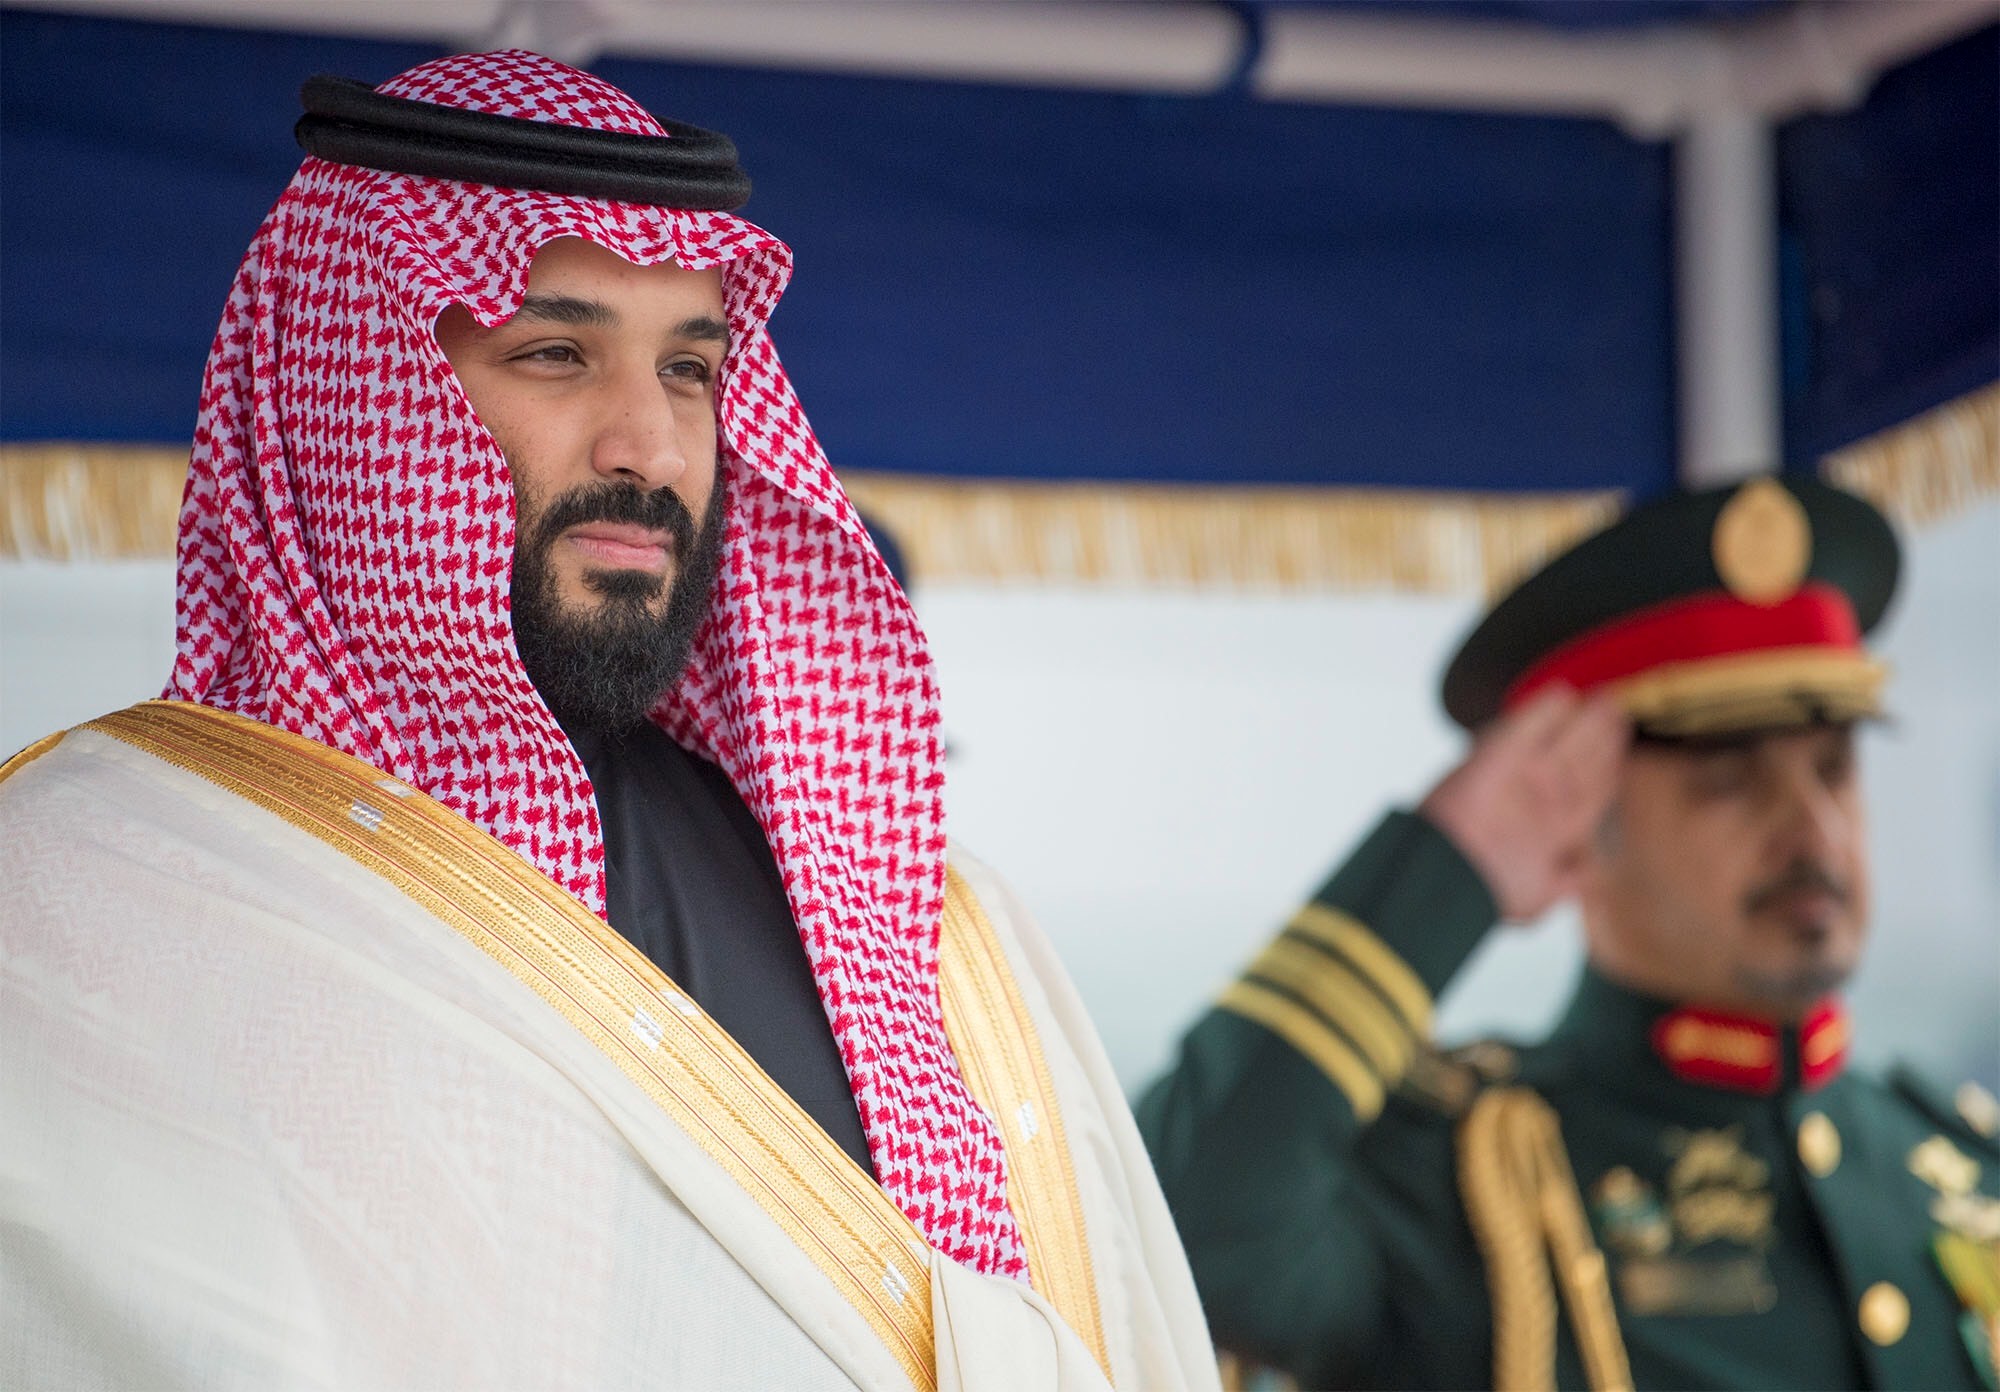 Crown Prince and Defense Minister of Saudi Arabia Mohammad bin Salman in London, England on March 9, 2018. (Bandar Algaloud—Saudi Kingdom Council/Getty Images)